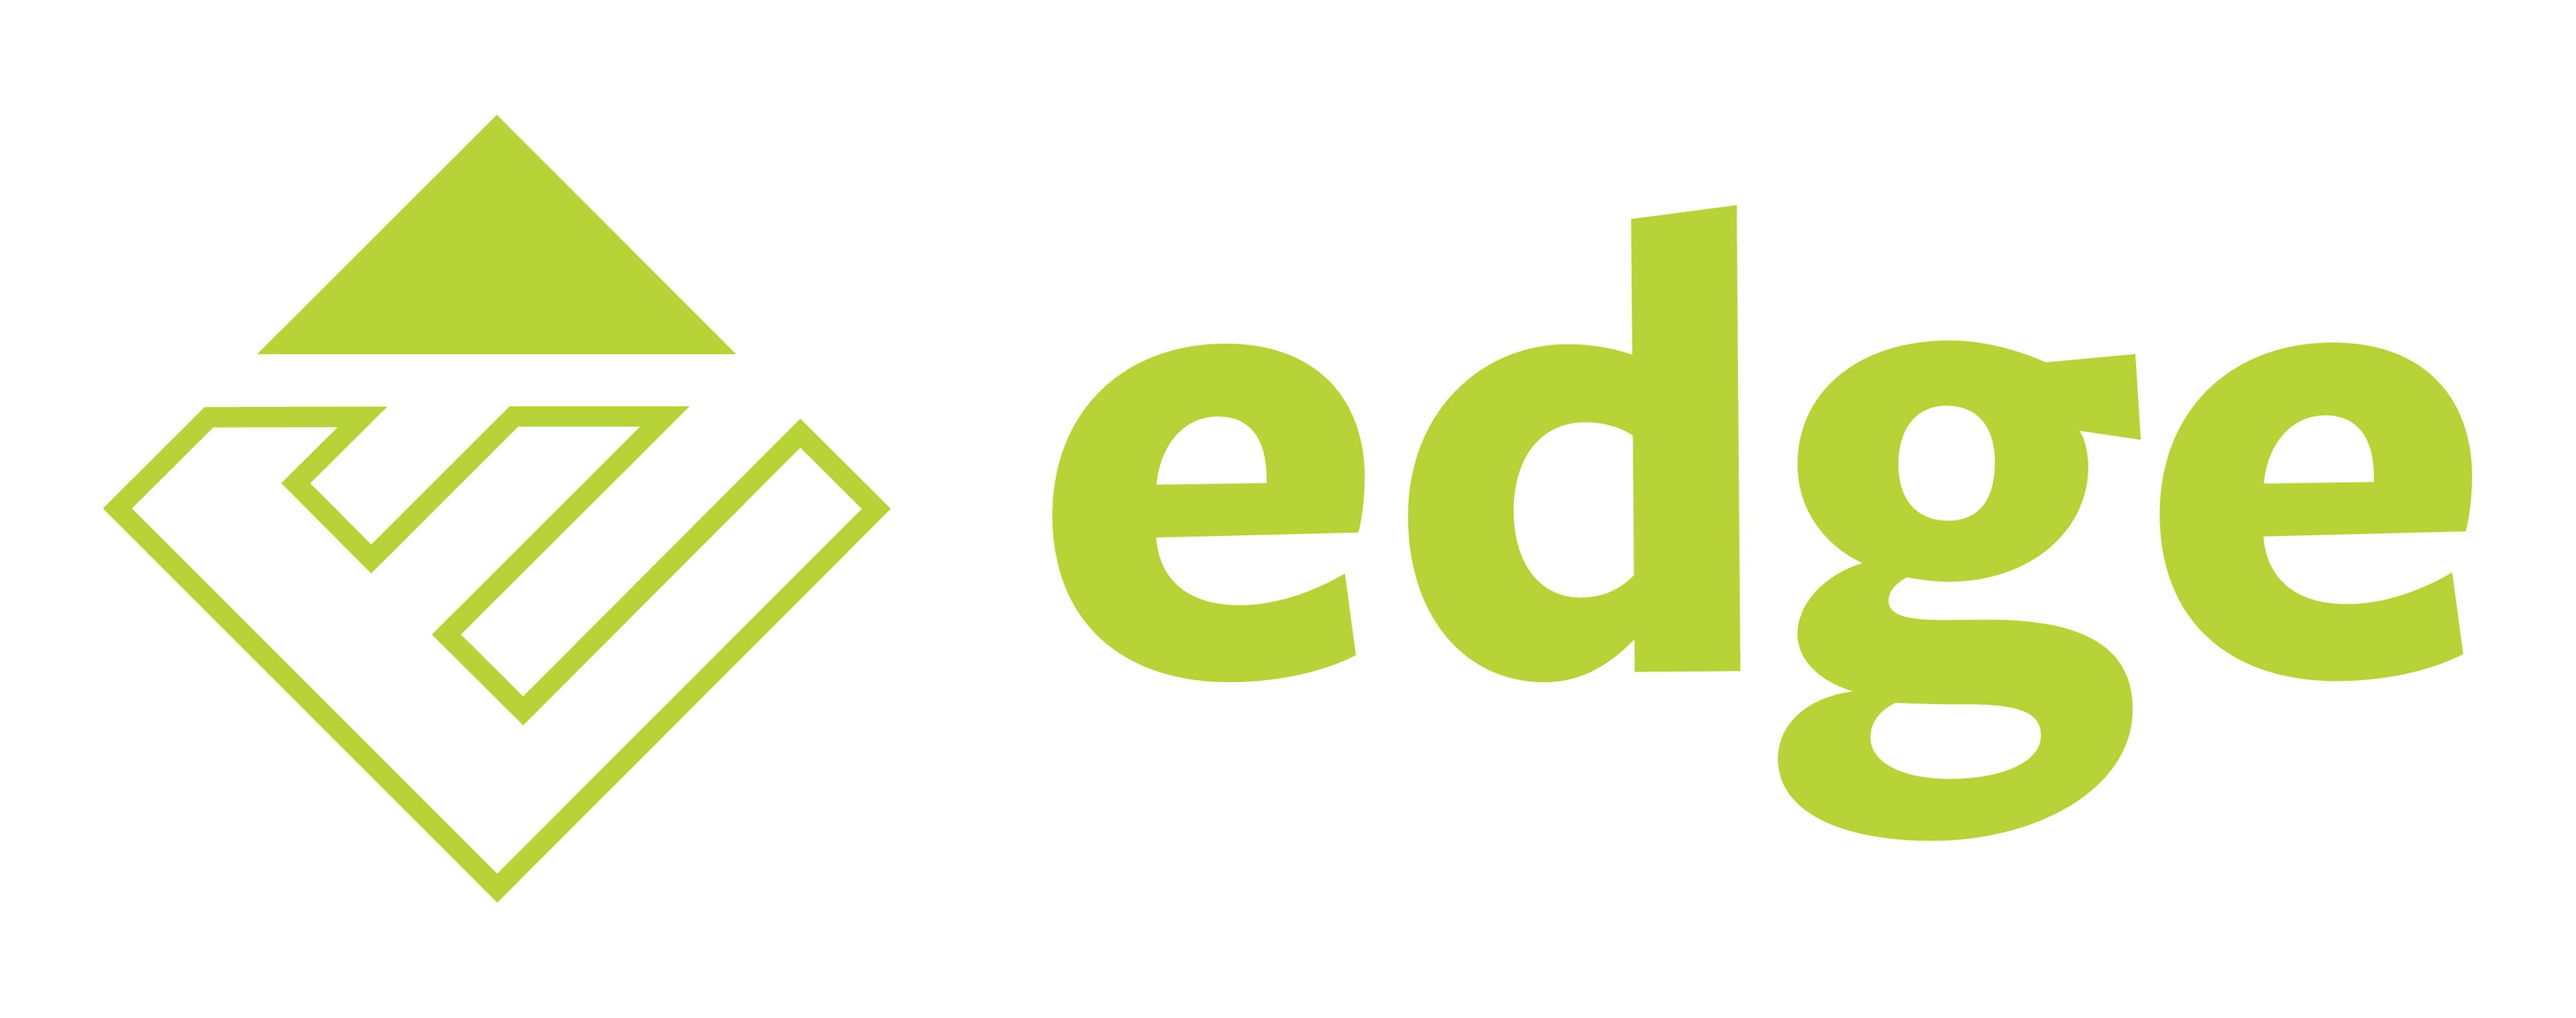 EDGE Logo